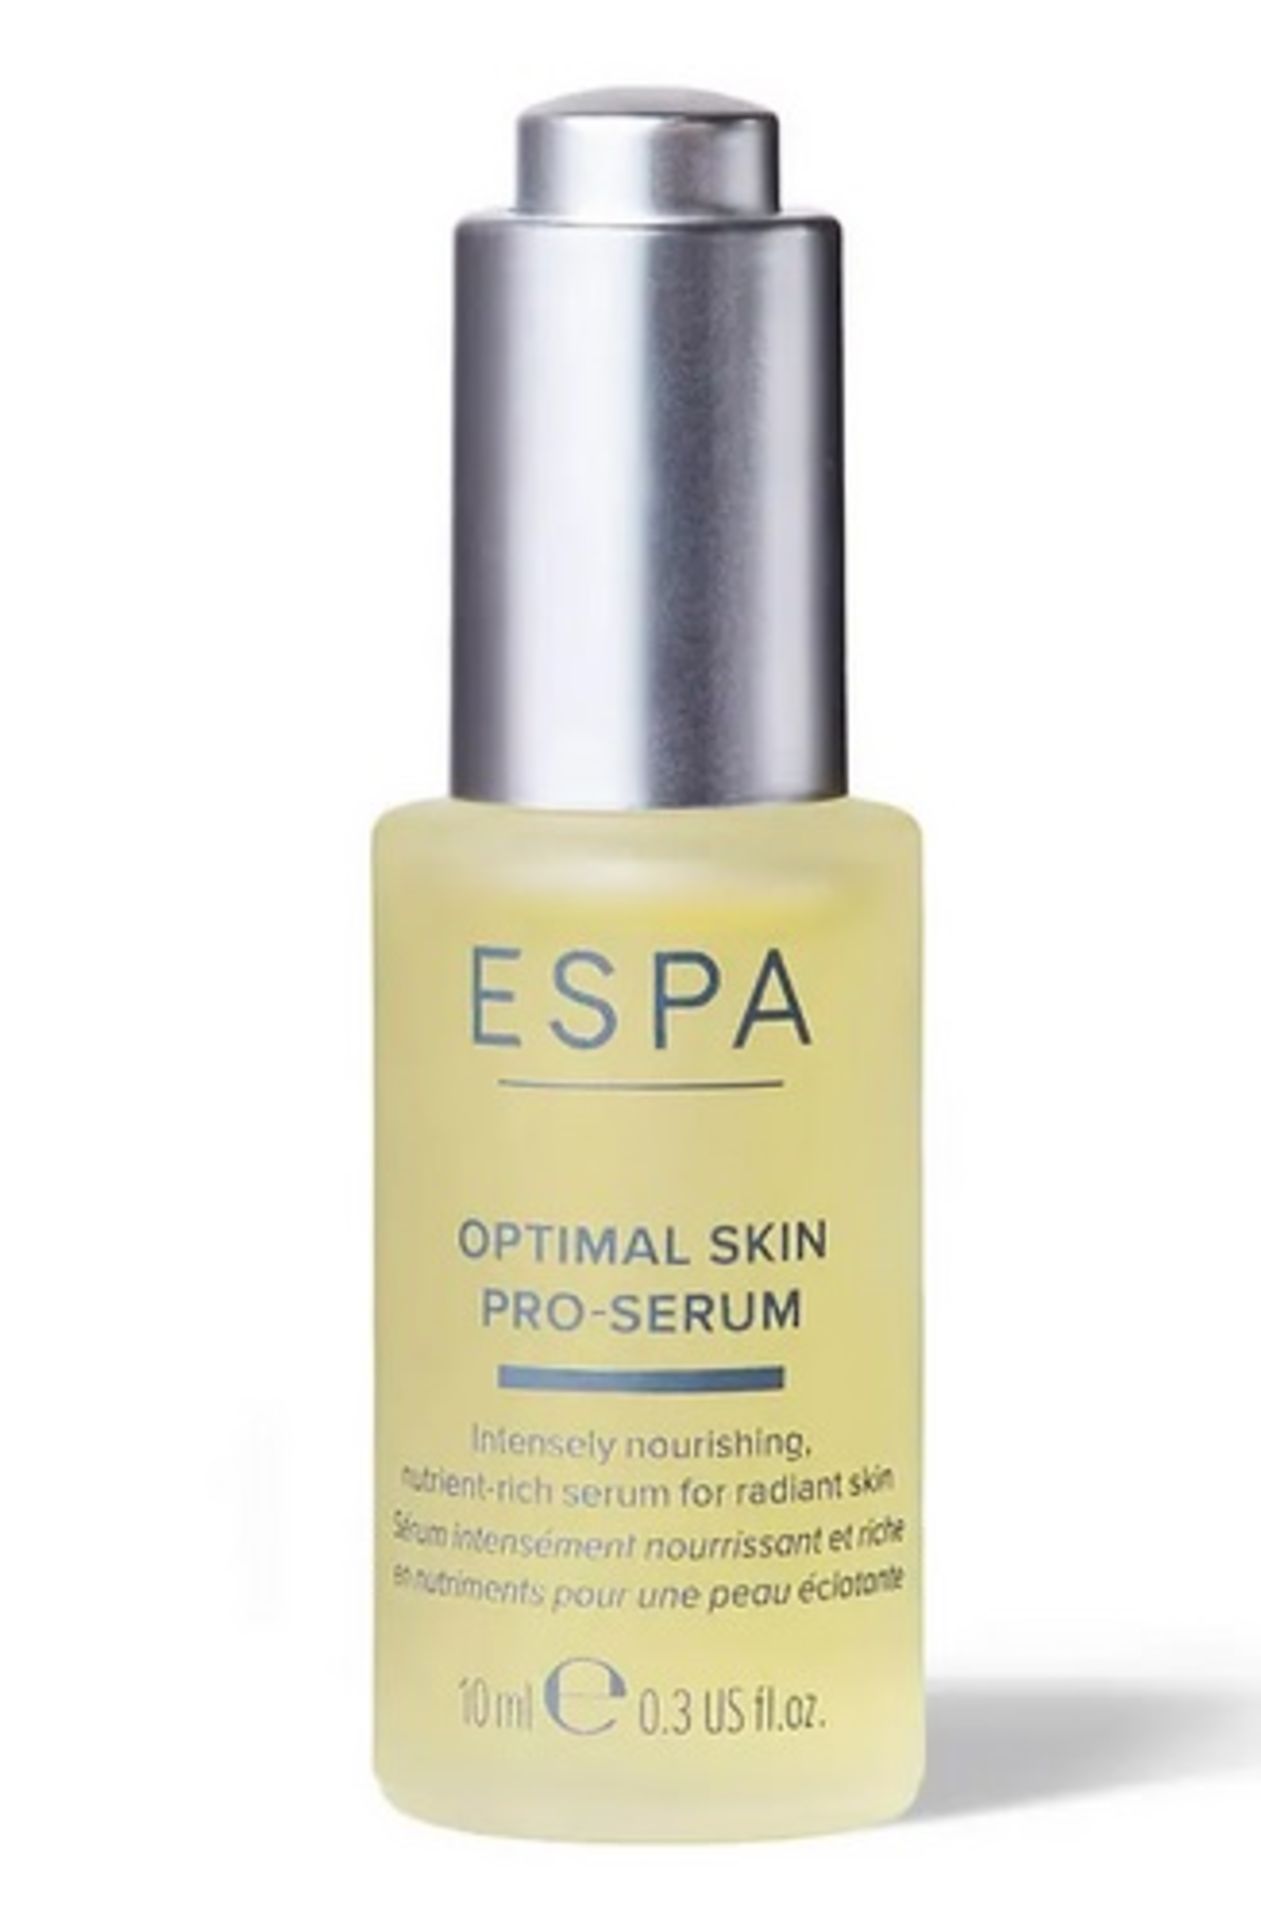 30x NEW ESPA Optimal Skin Pro-Serum 10ml. RRP £10 each. (R12-16) The key to maintaining the tone,